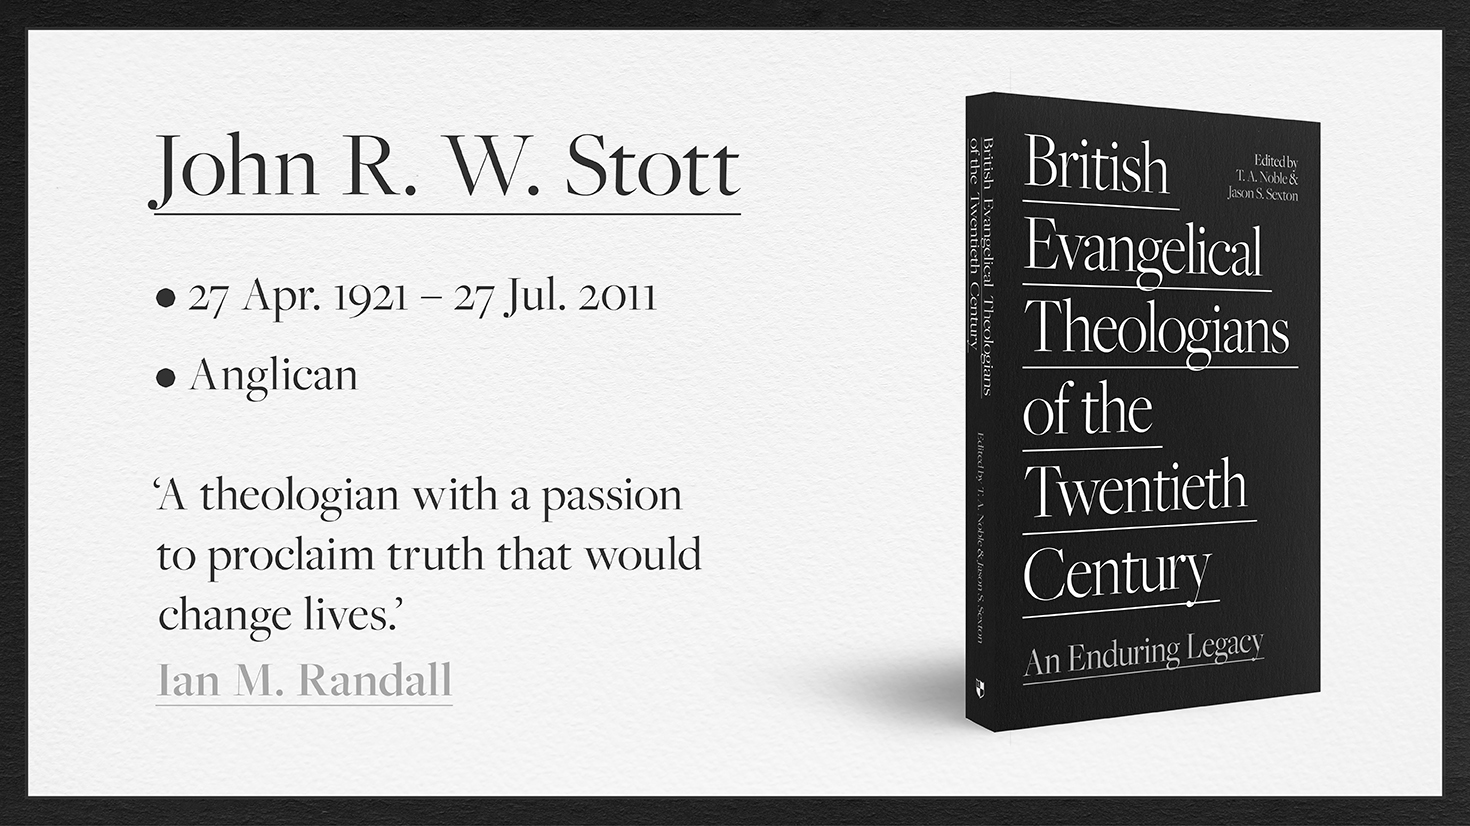 John Stott: British Evangelical Theologian of the Twentieth Century